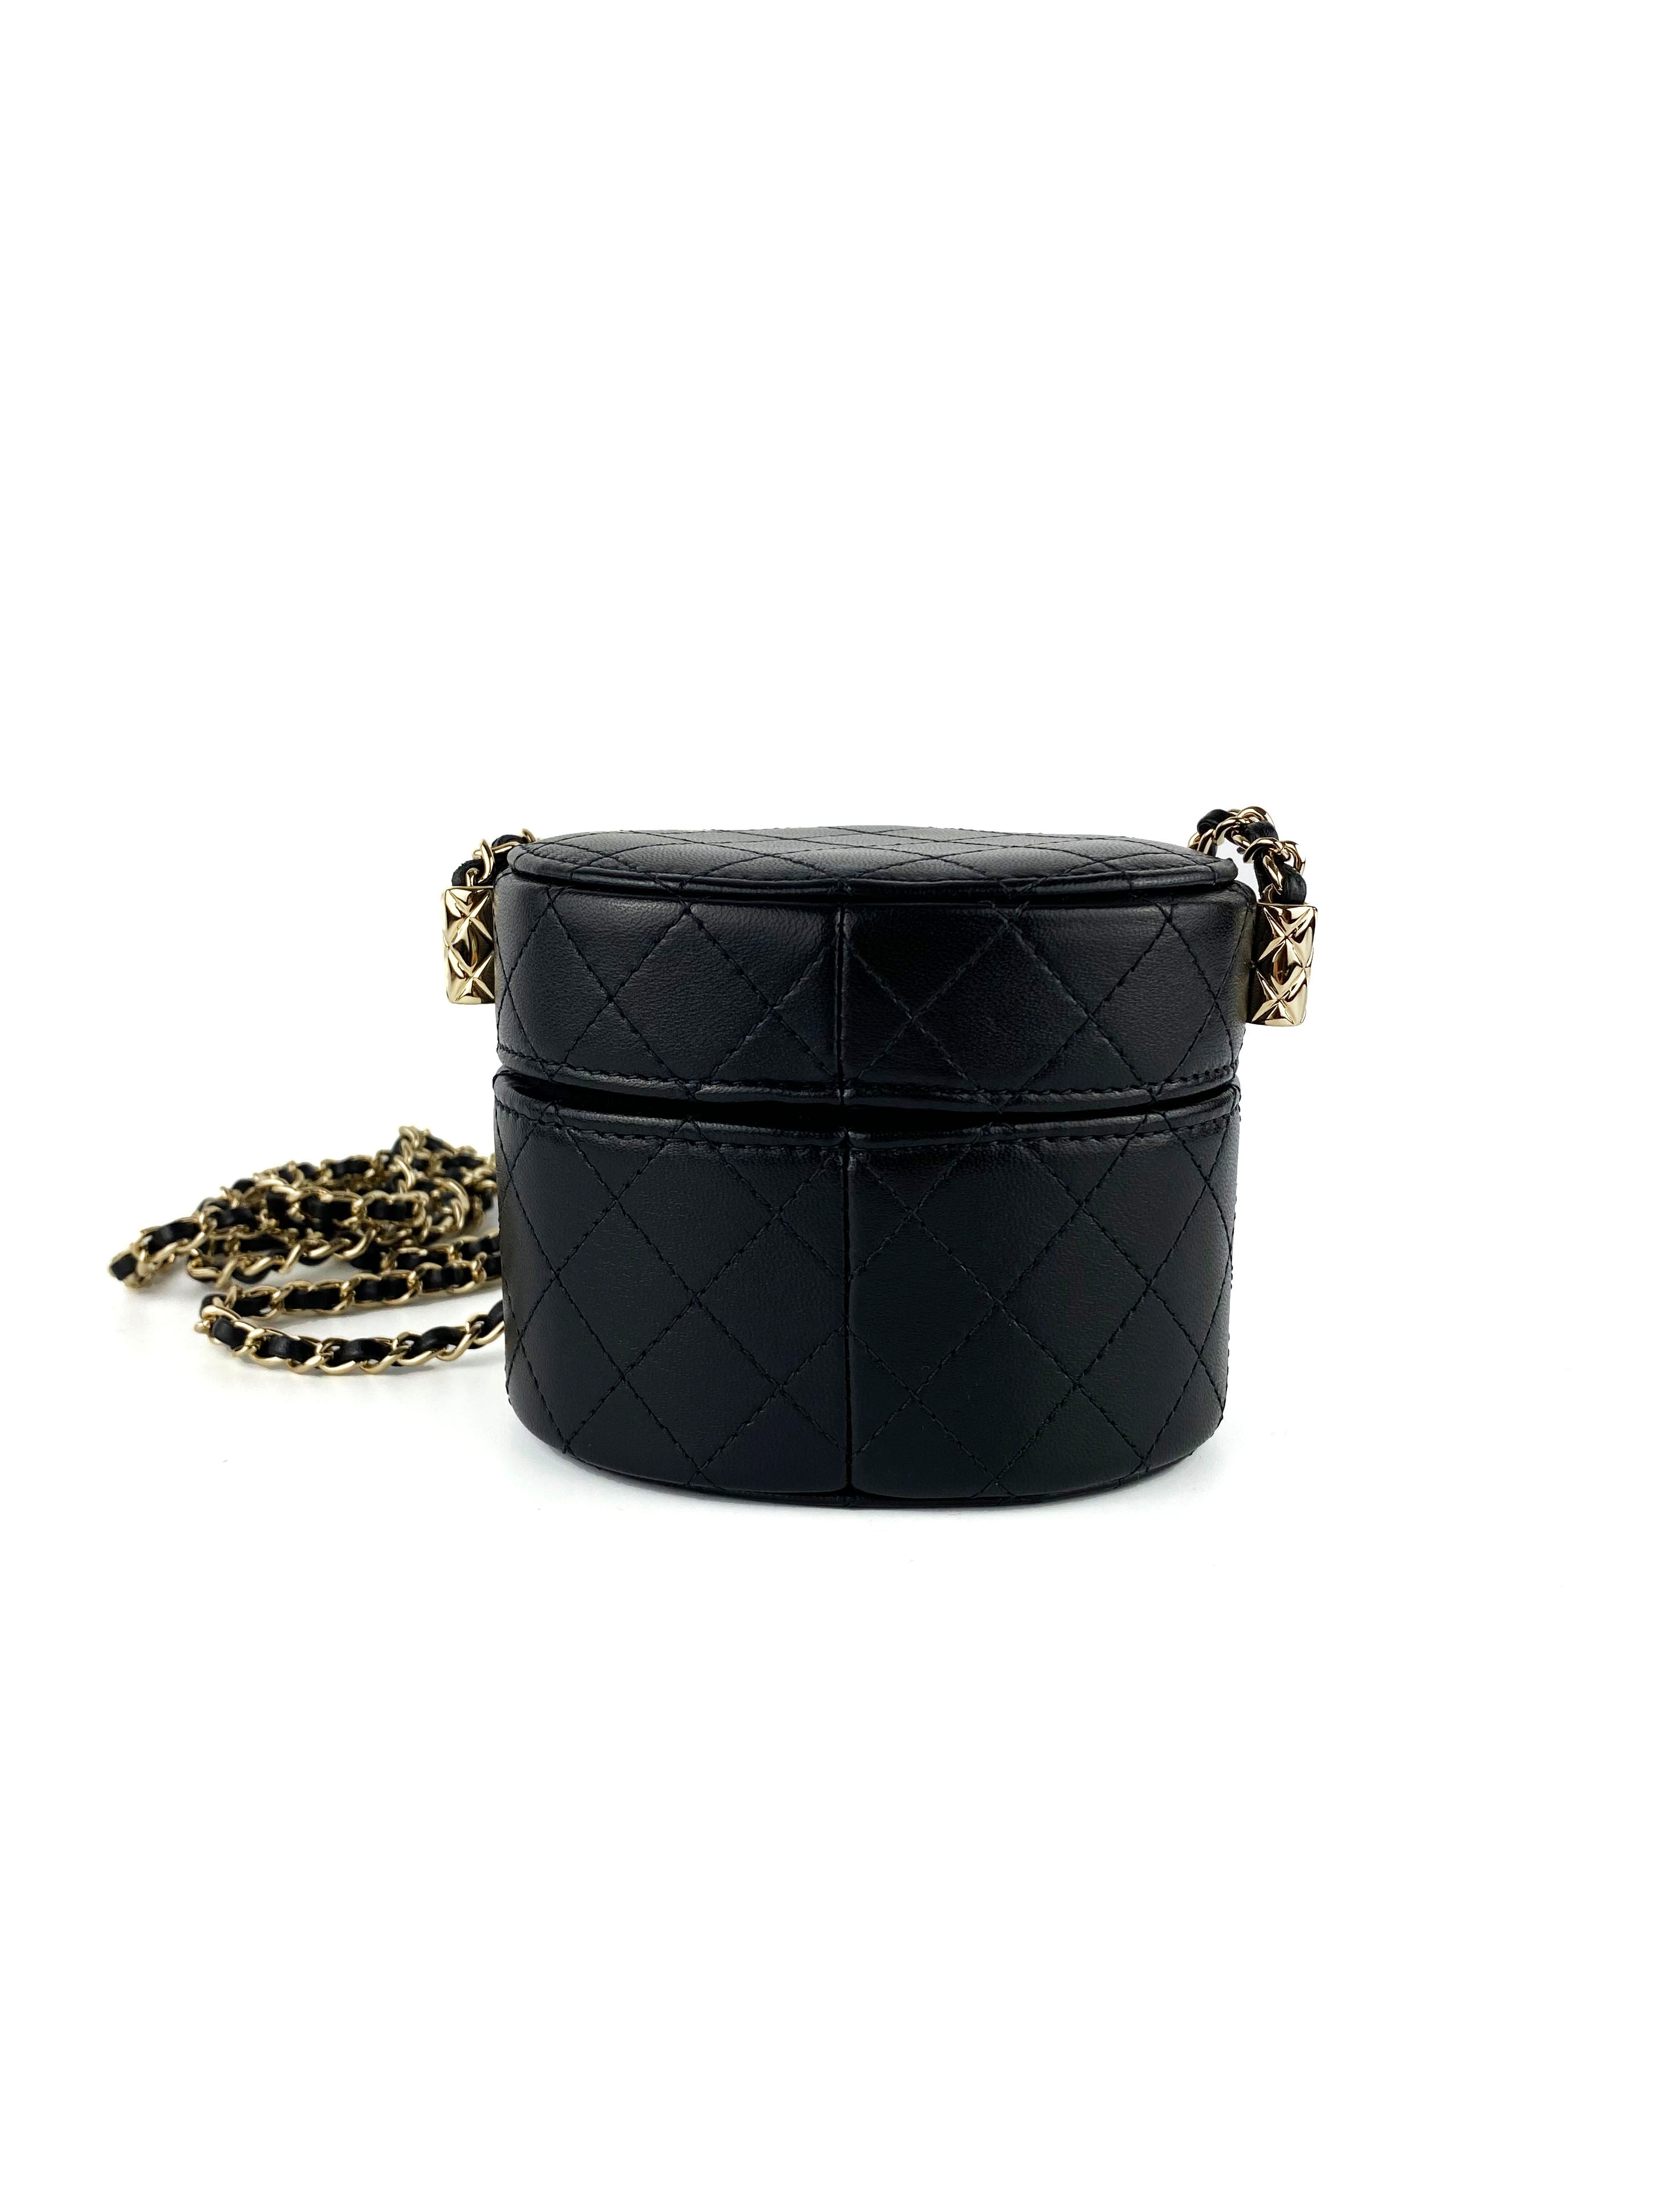 Chanel Black Vanity Clutch Box